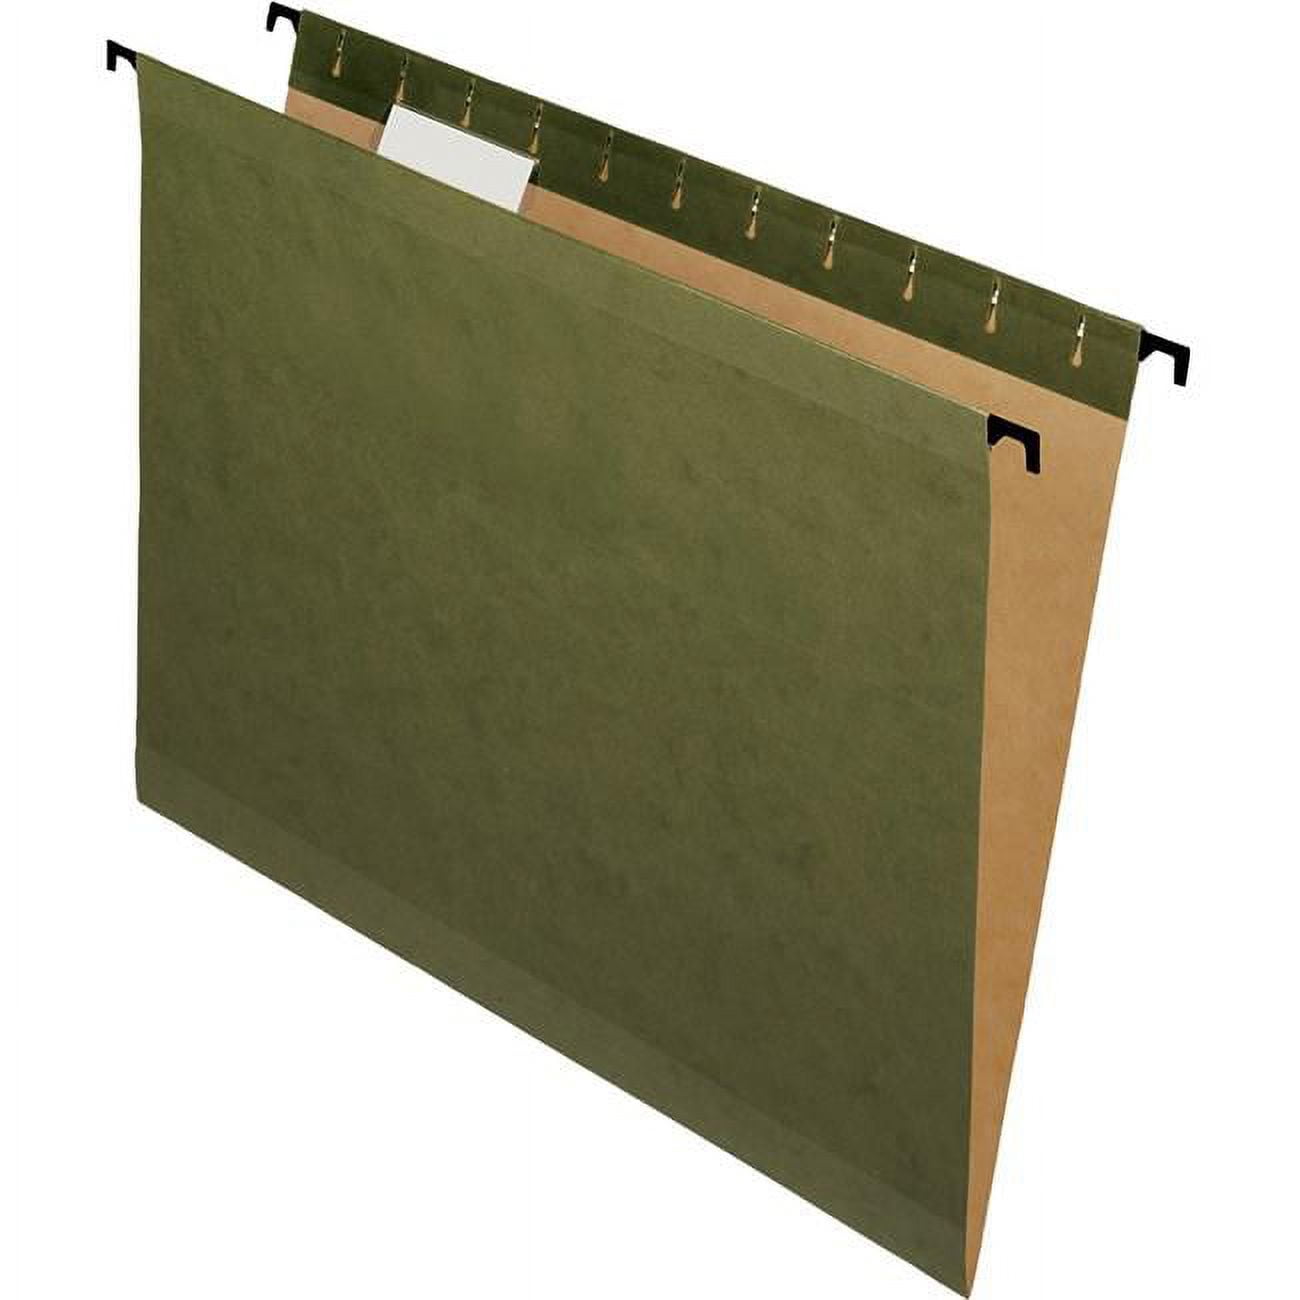 Pfx6152 1-5 8.5 X 11 In. 5 Tab Pendaflex Sure Hook Hanging Folder, Green - Pack Of 5